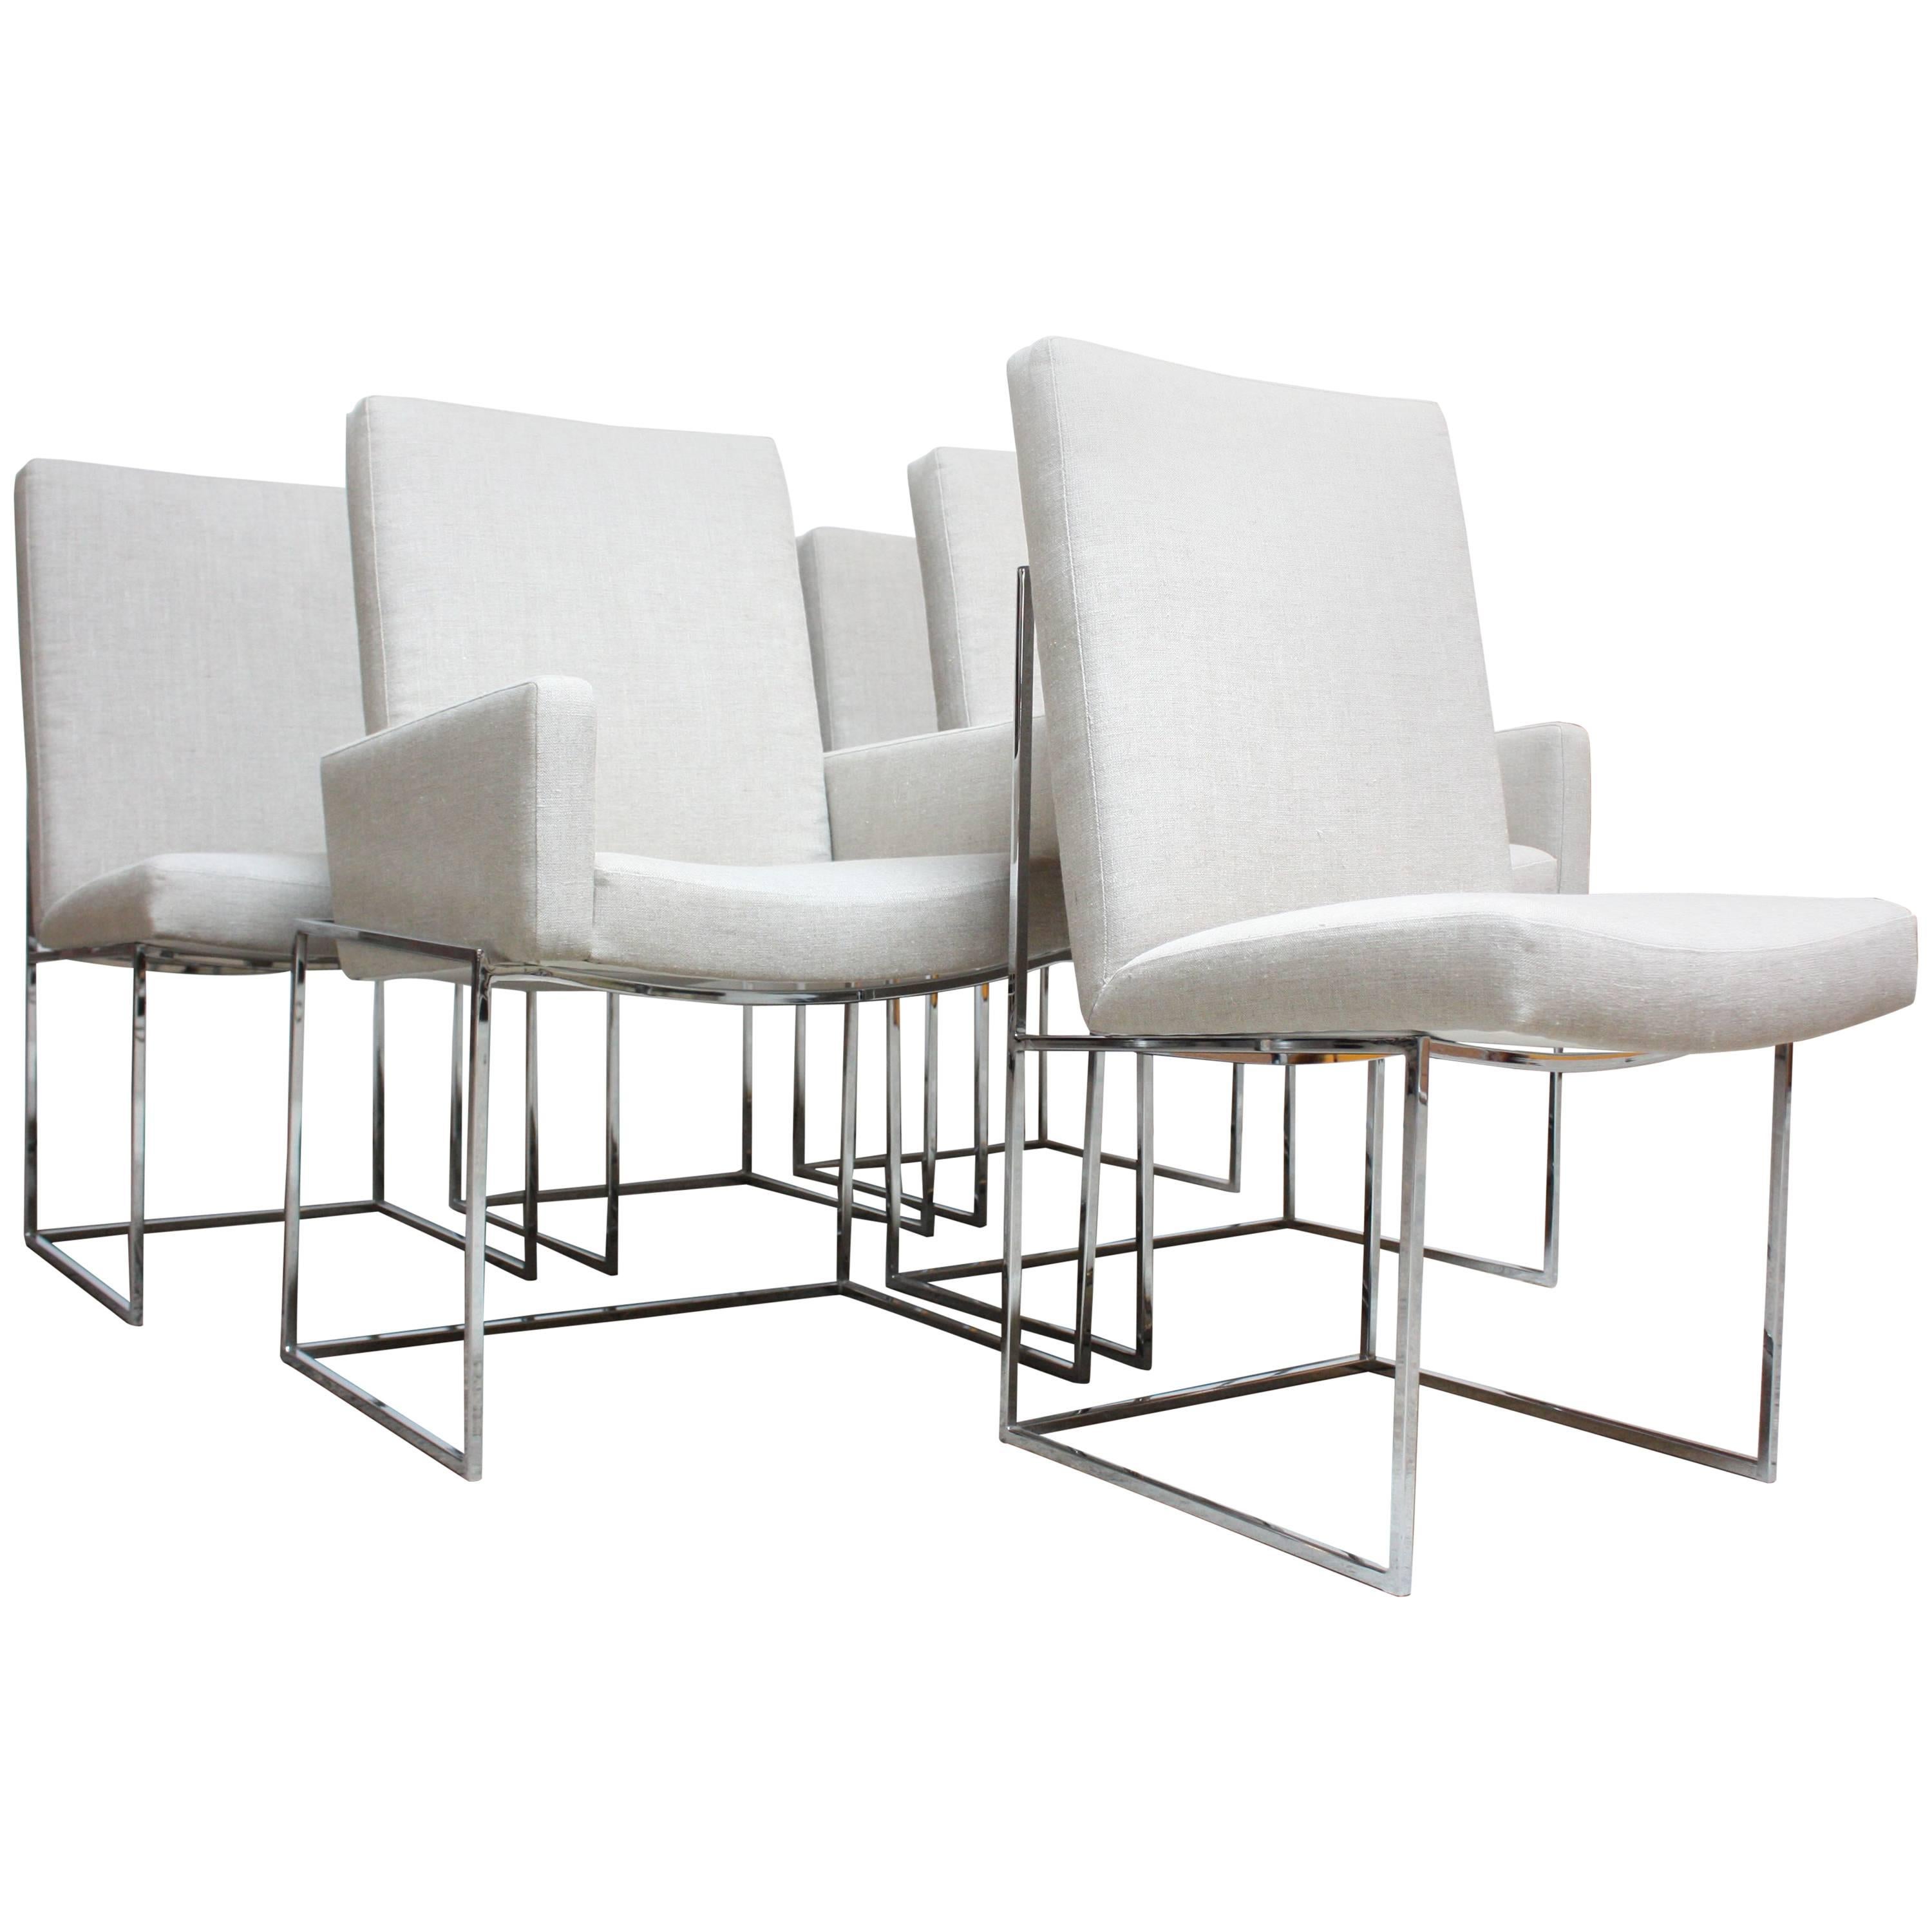 Set of Six Milo Baughman 'Thin Line' Chrome Dining Chairs